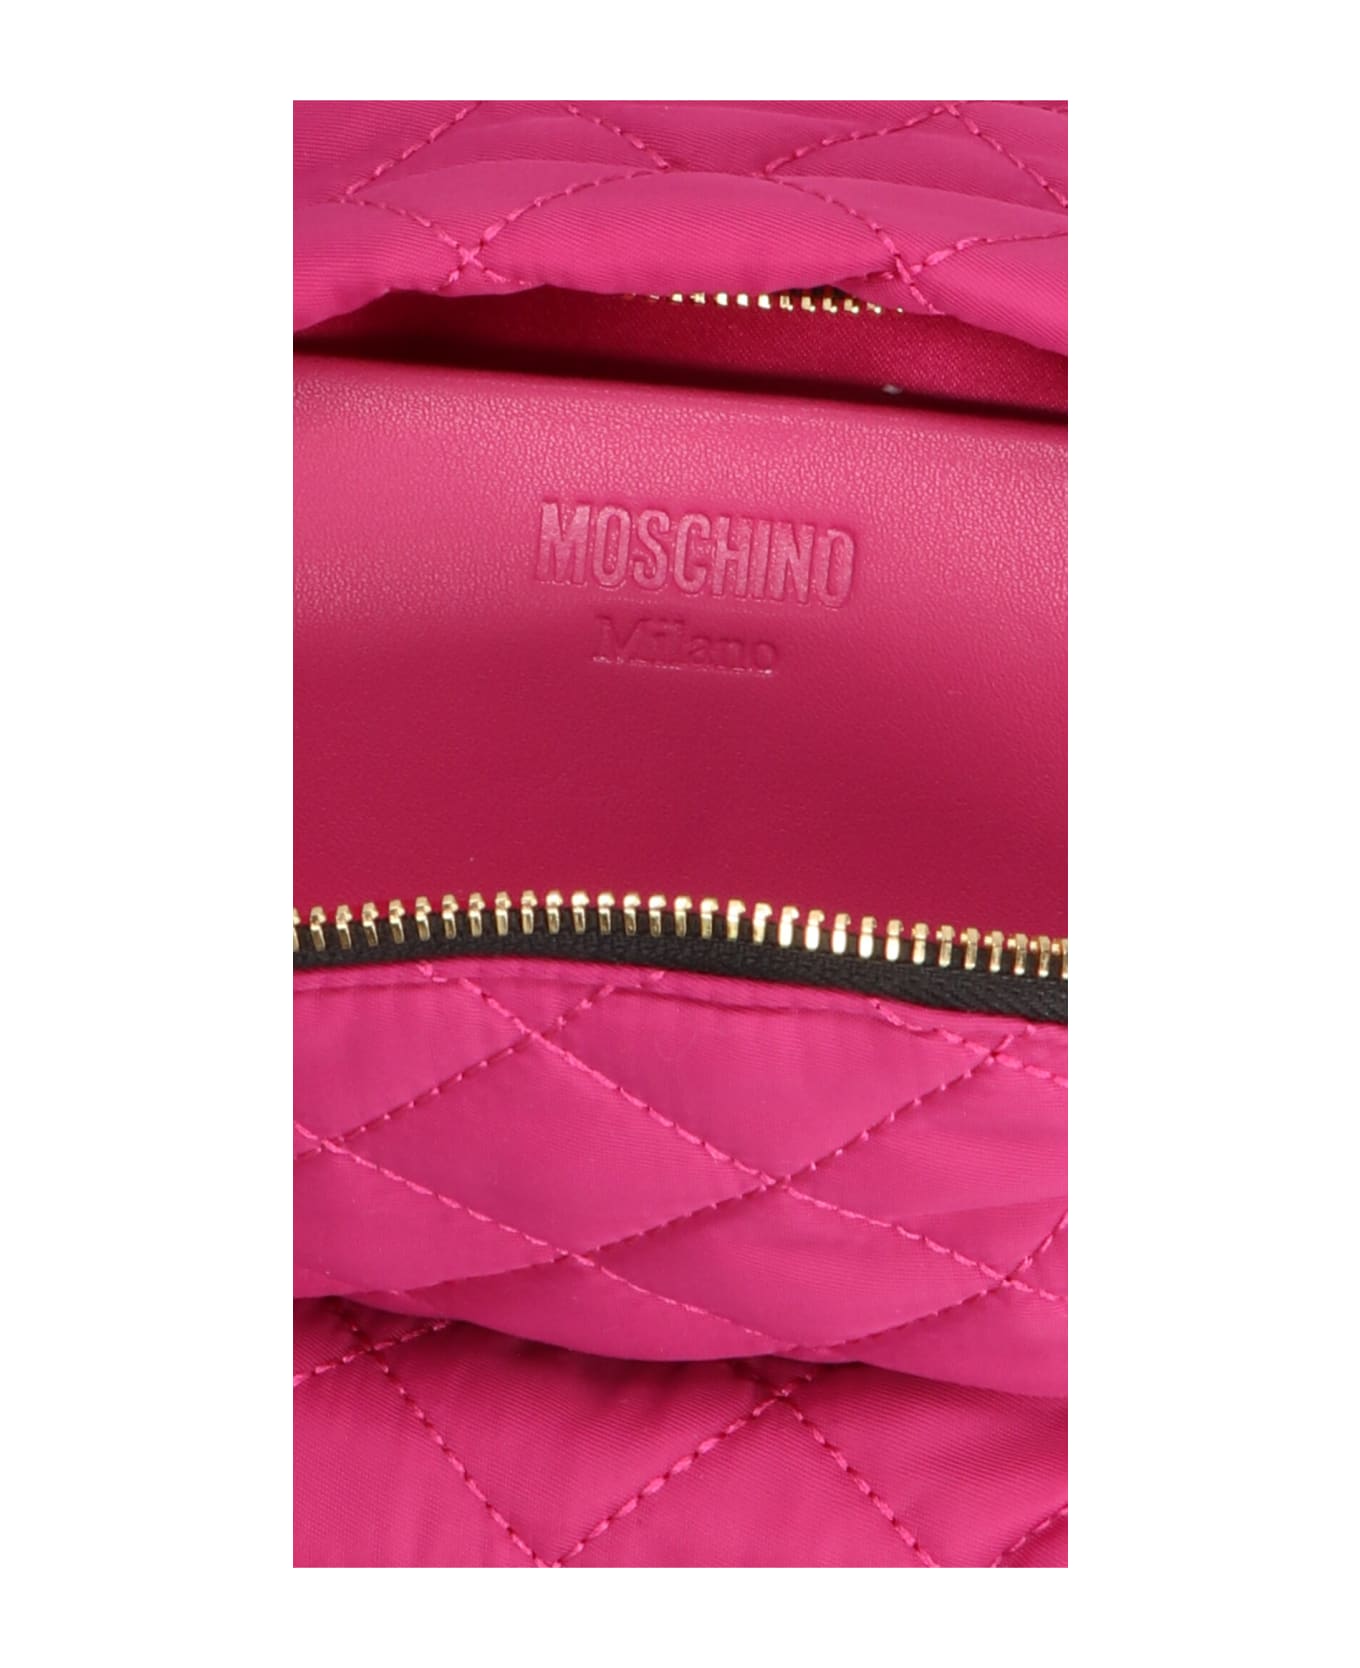 Moschino Logo Mini Backpack - Fuchsia